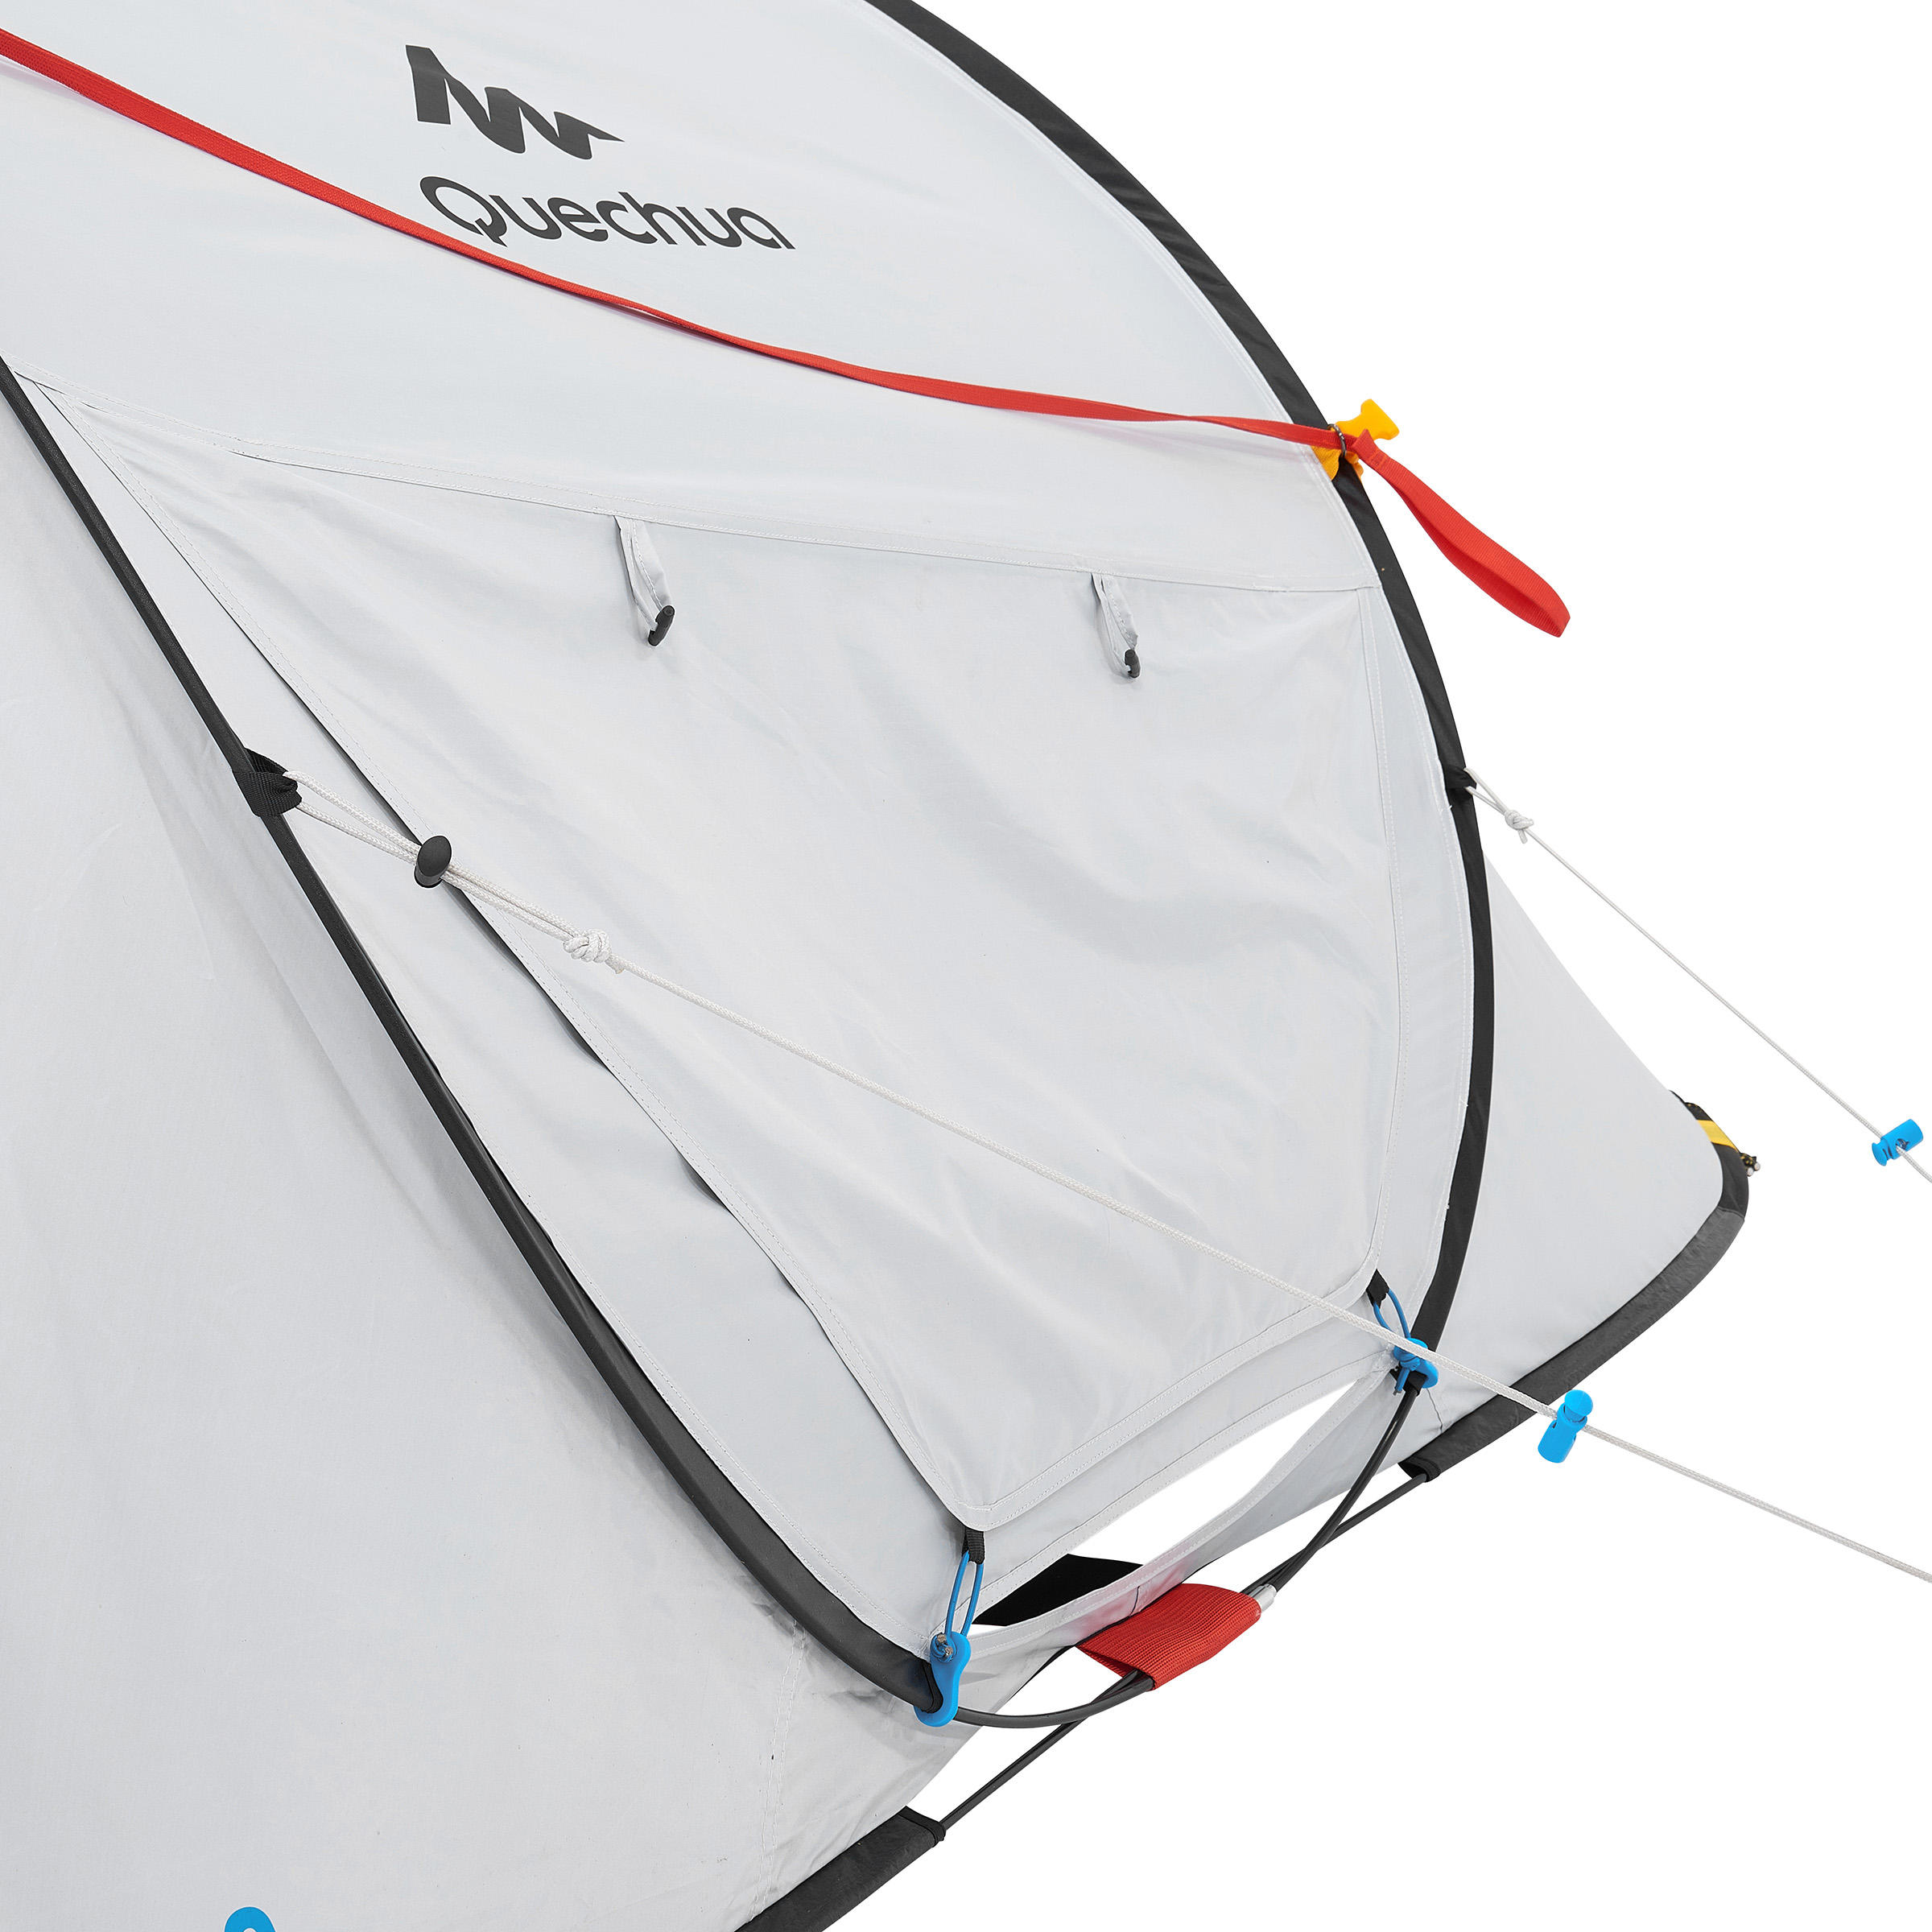 3-Person Camping Tent - 2 Seconds Fresh & Black White - QUECHUA